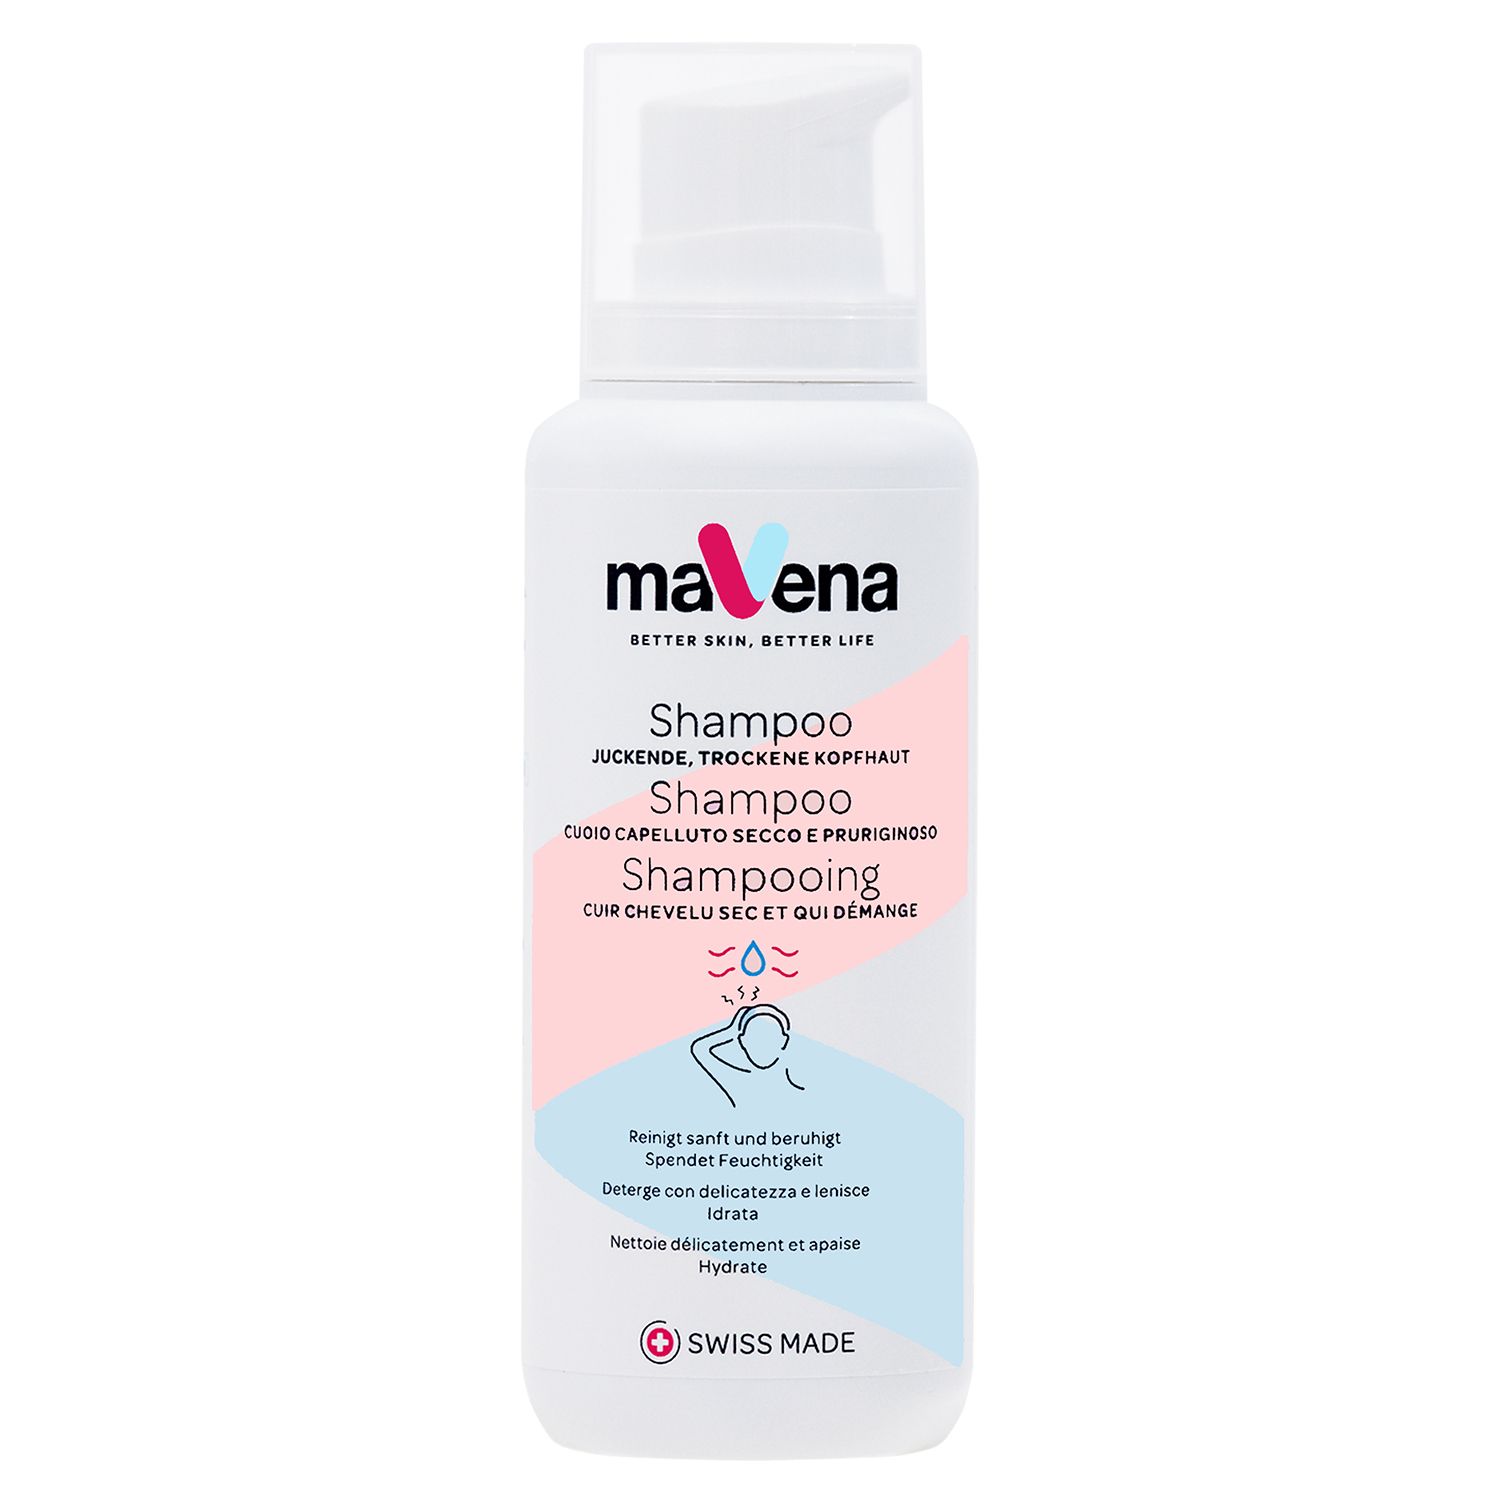 maVena® Shampoo